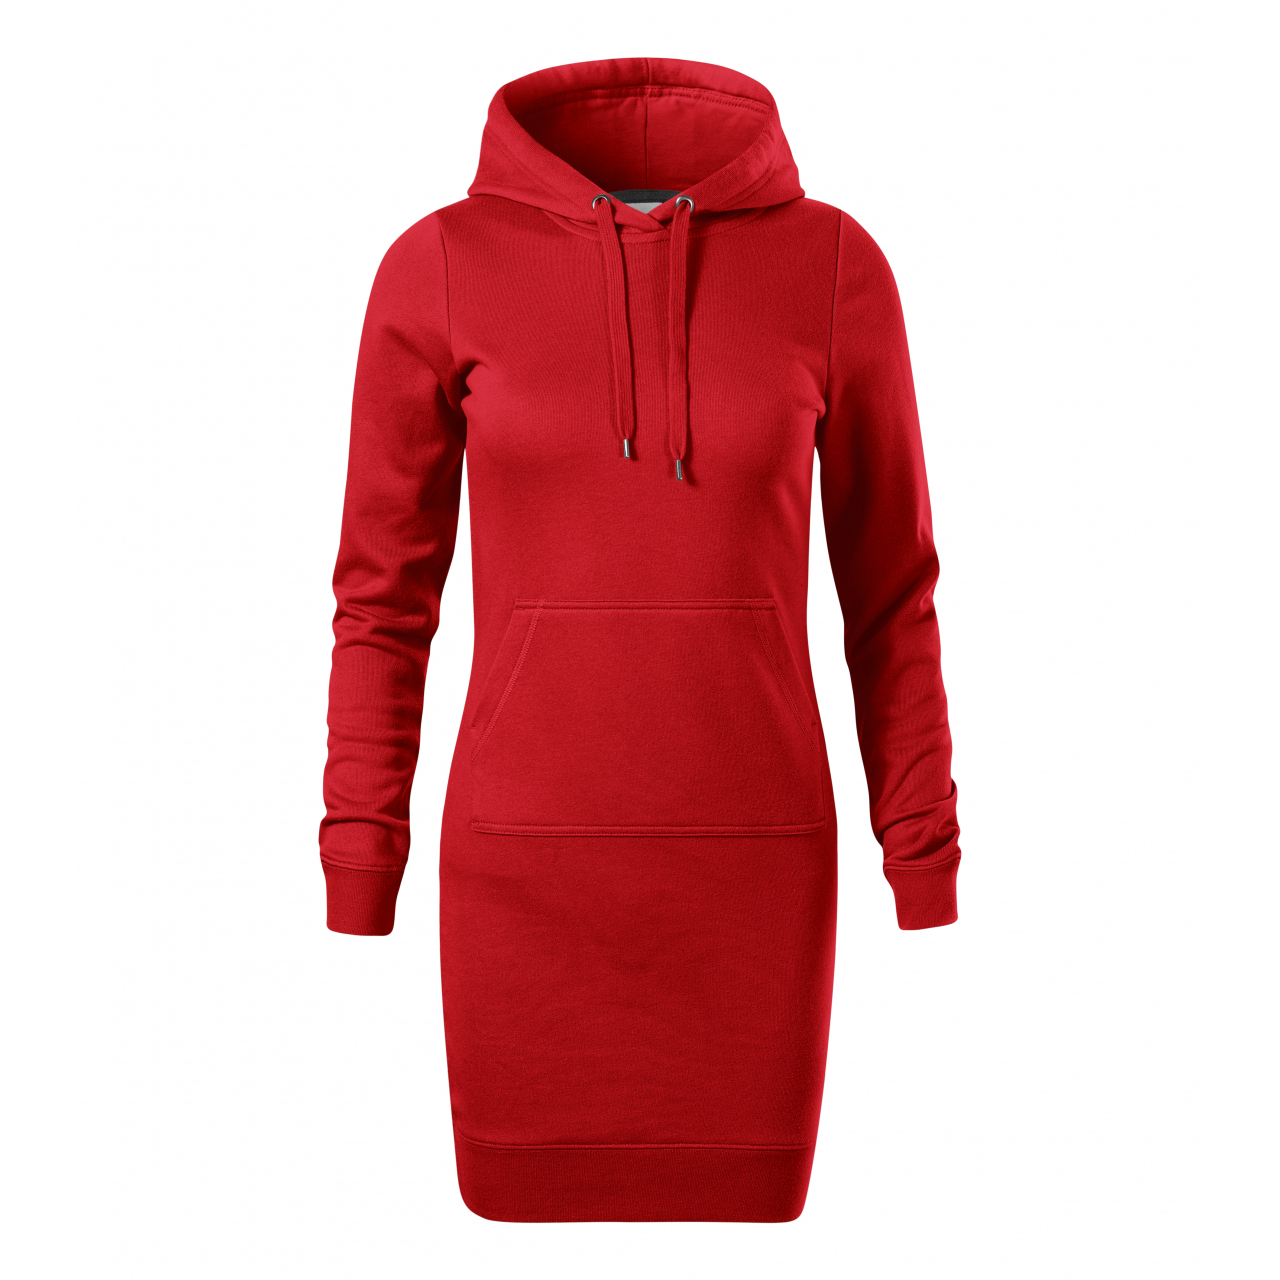 Šaty dámské Malfini Snap - červené, XL